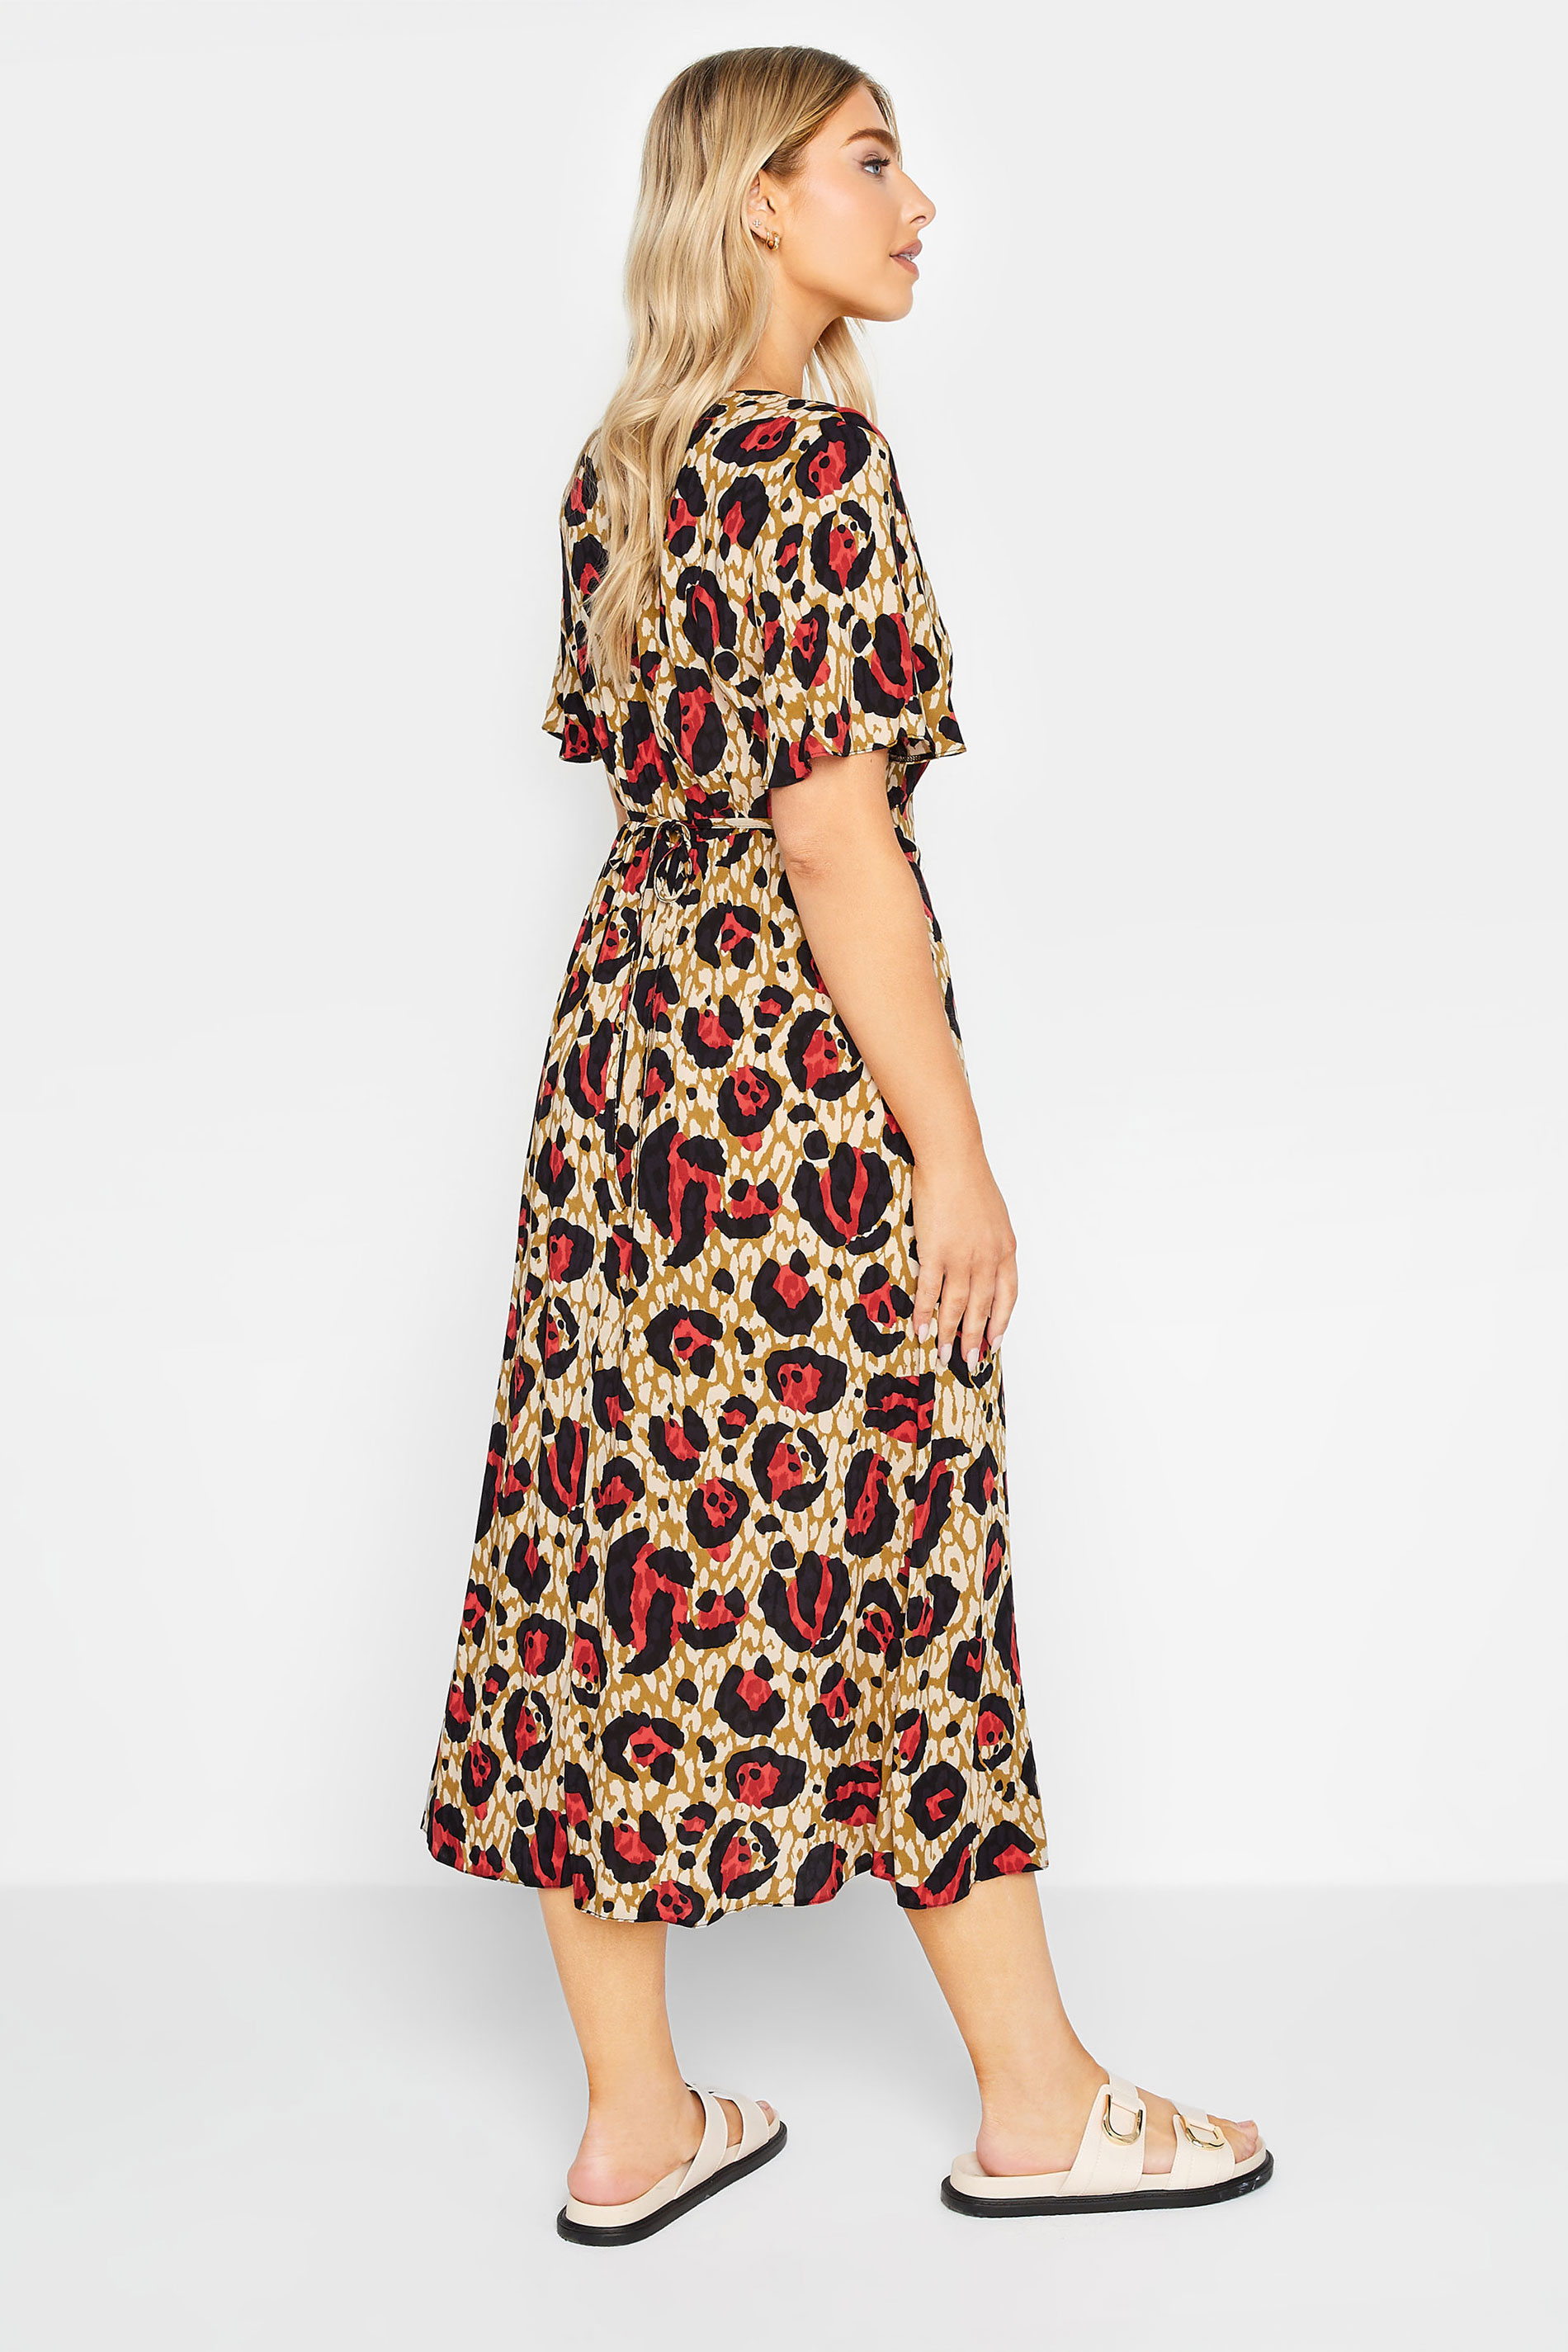 M&Co Natural Brown & Red Leopard Print Midi Button Through Tea Dress | M&Co